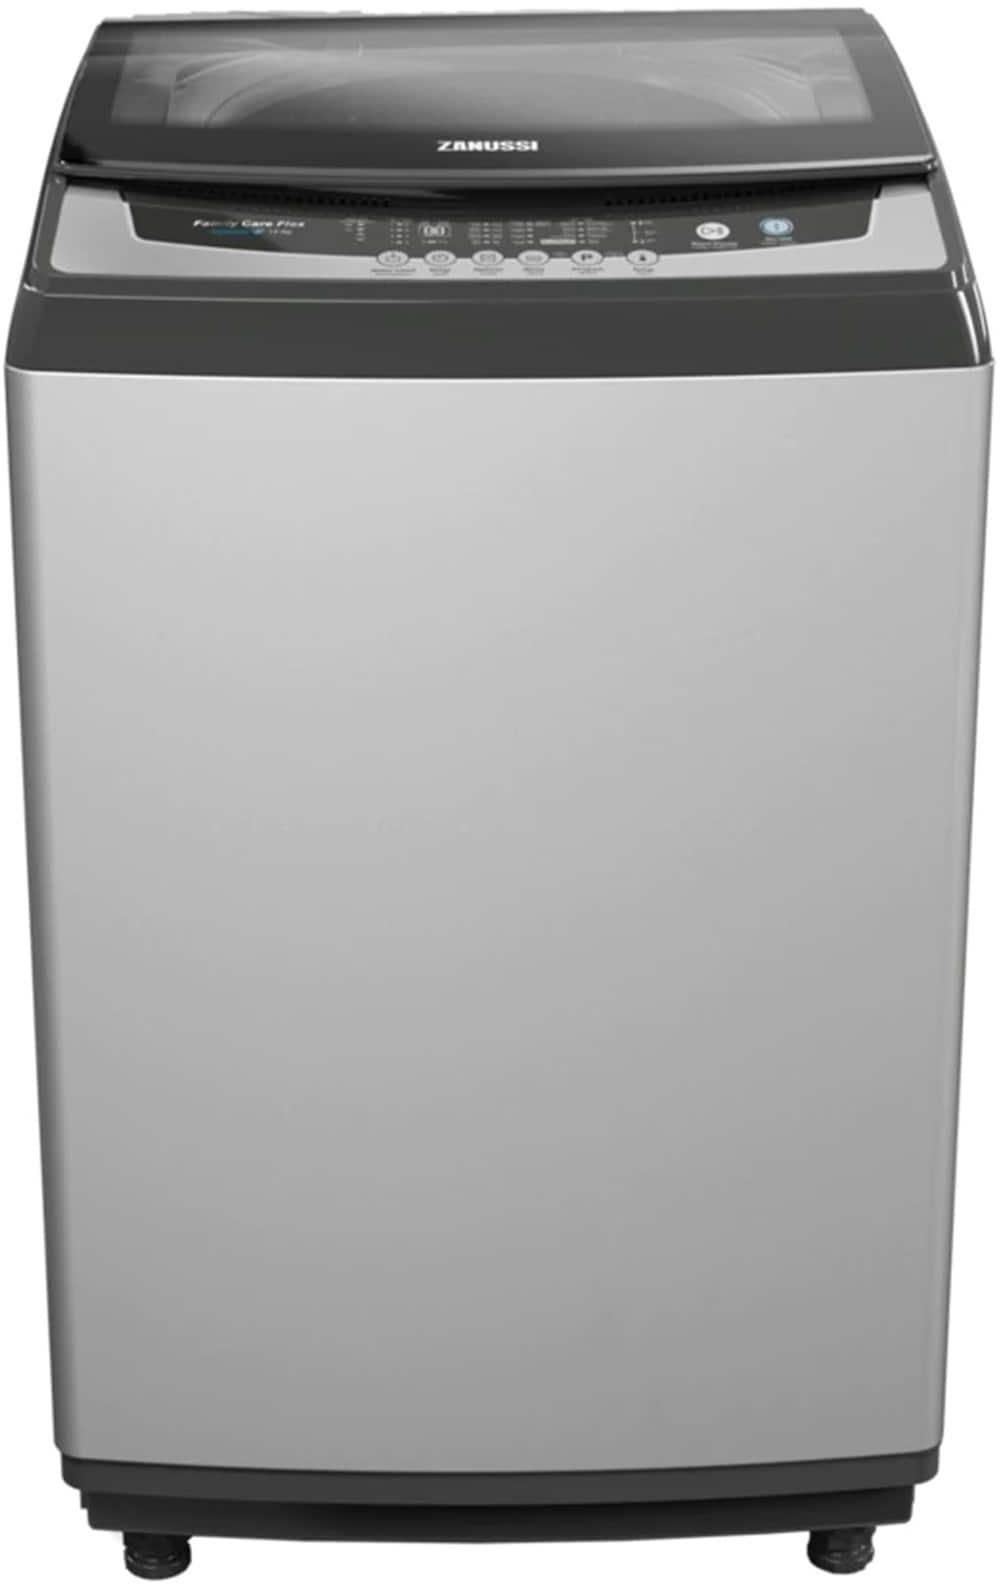 Zanussi Top Loading Washing Machine - 12kg- Silver - ZWT12710S